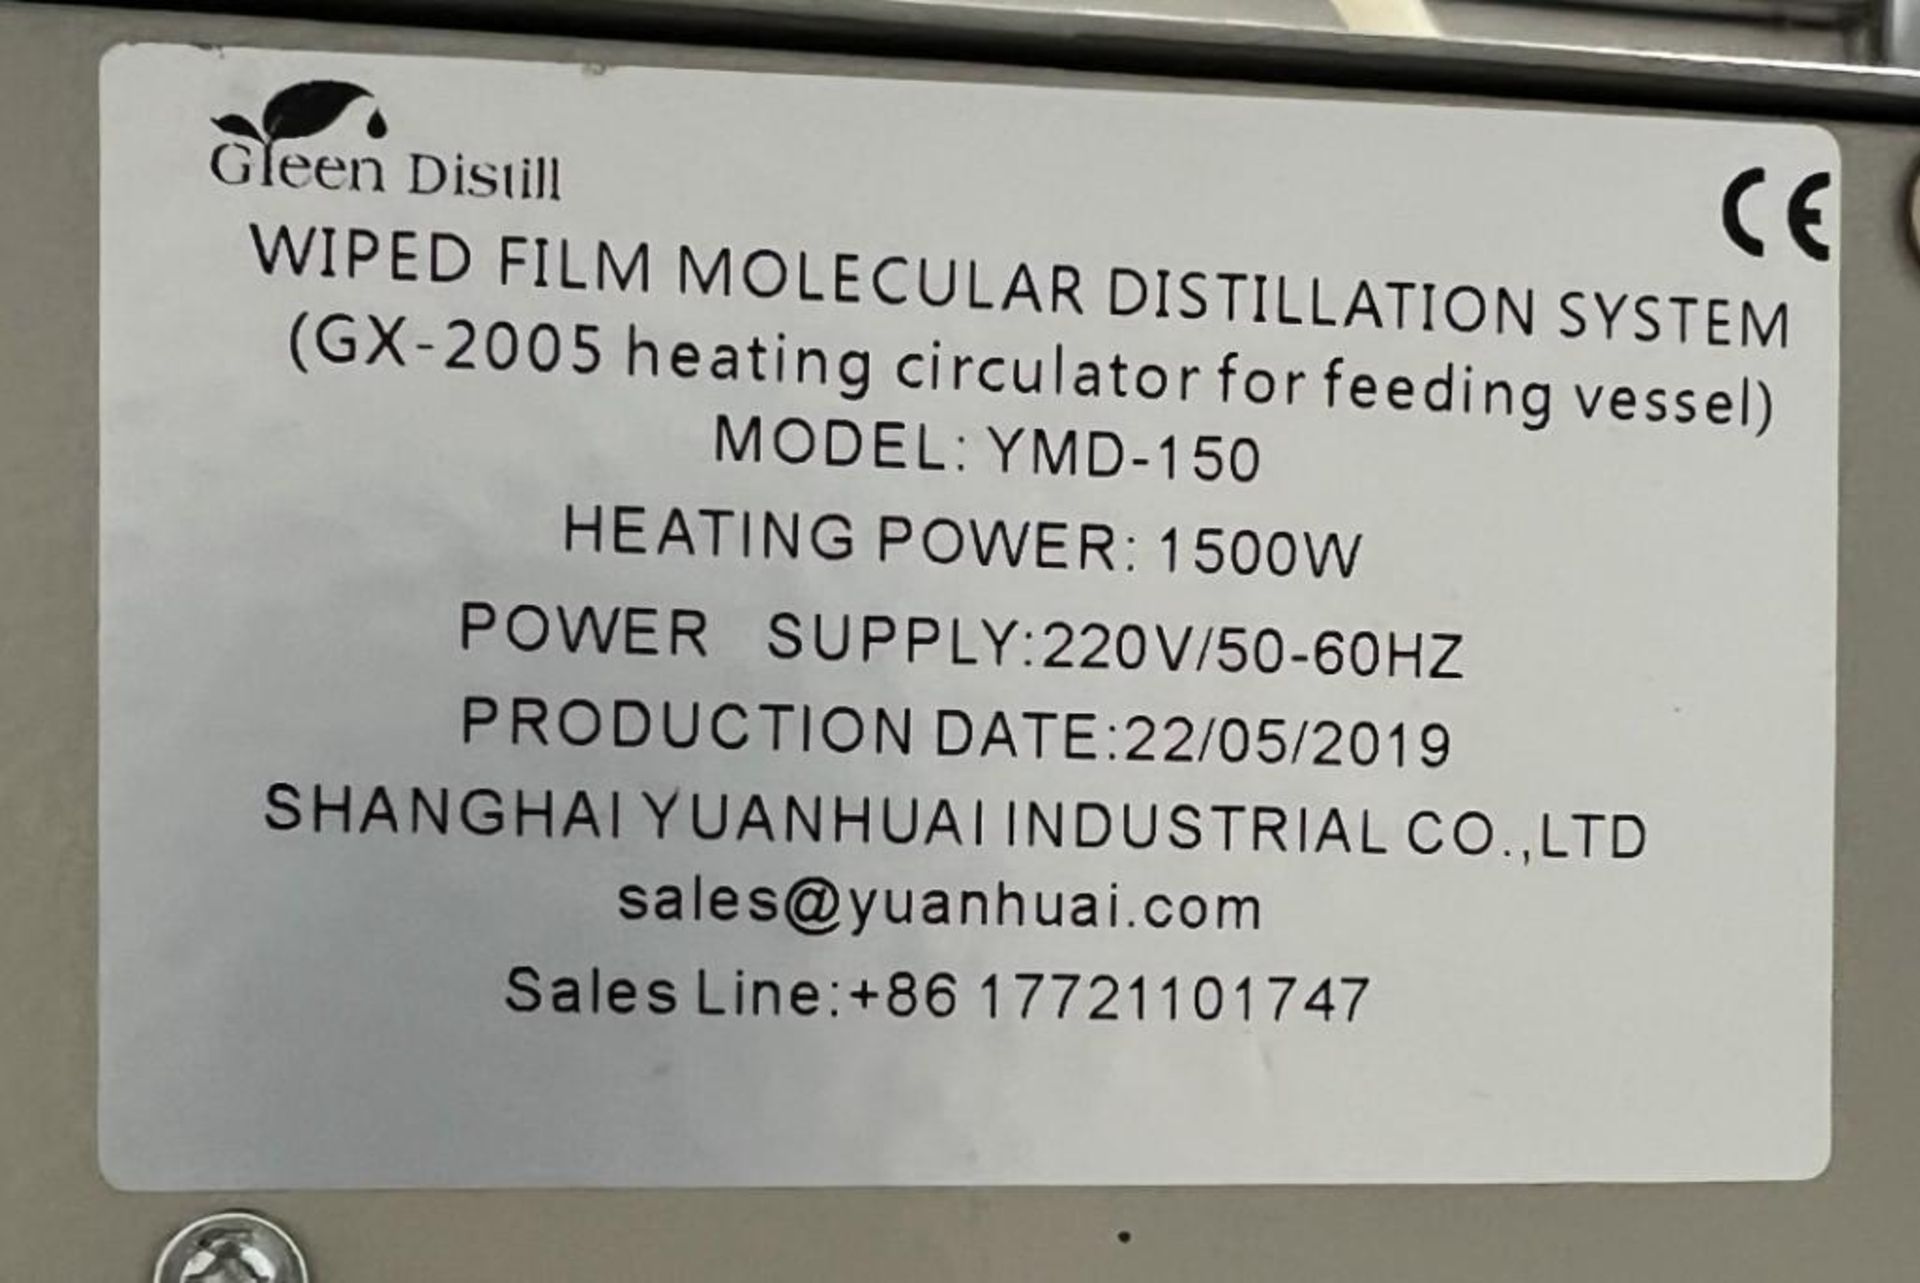 YHCHEM Wiped Film Molecular Distillation System, Model YMD-150, Built 05/2019. With misc. glass, vac - Image 17 of 29